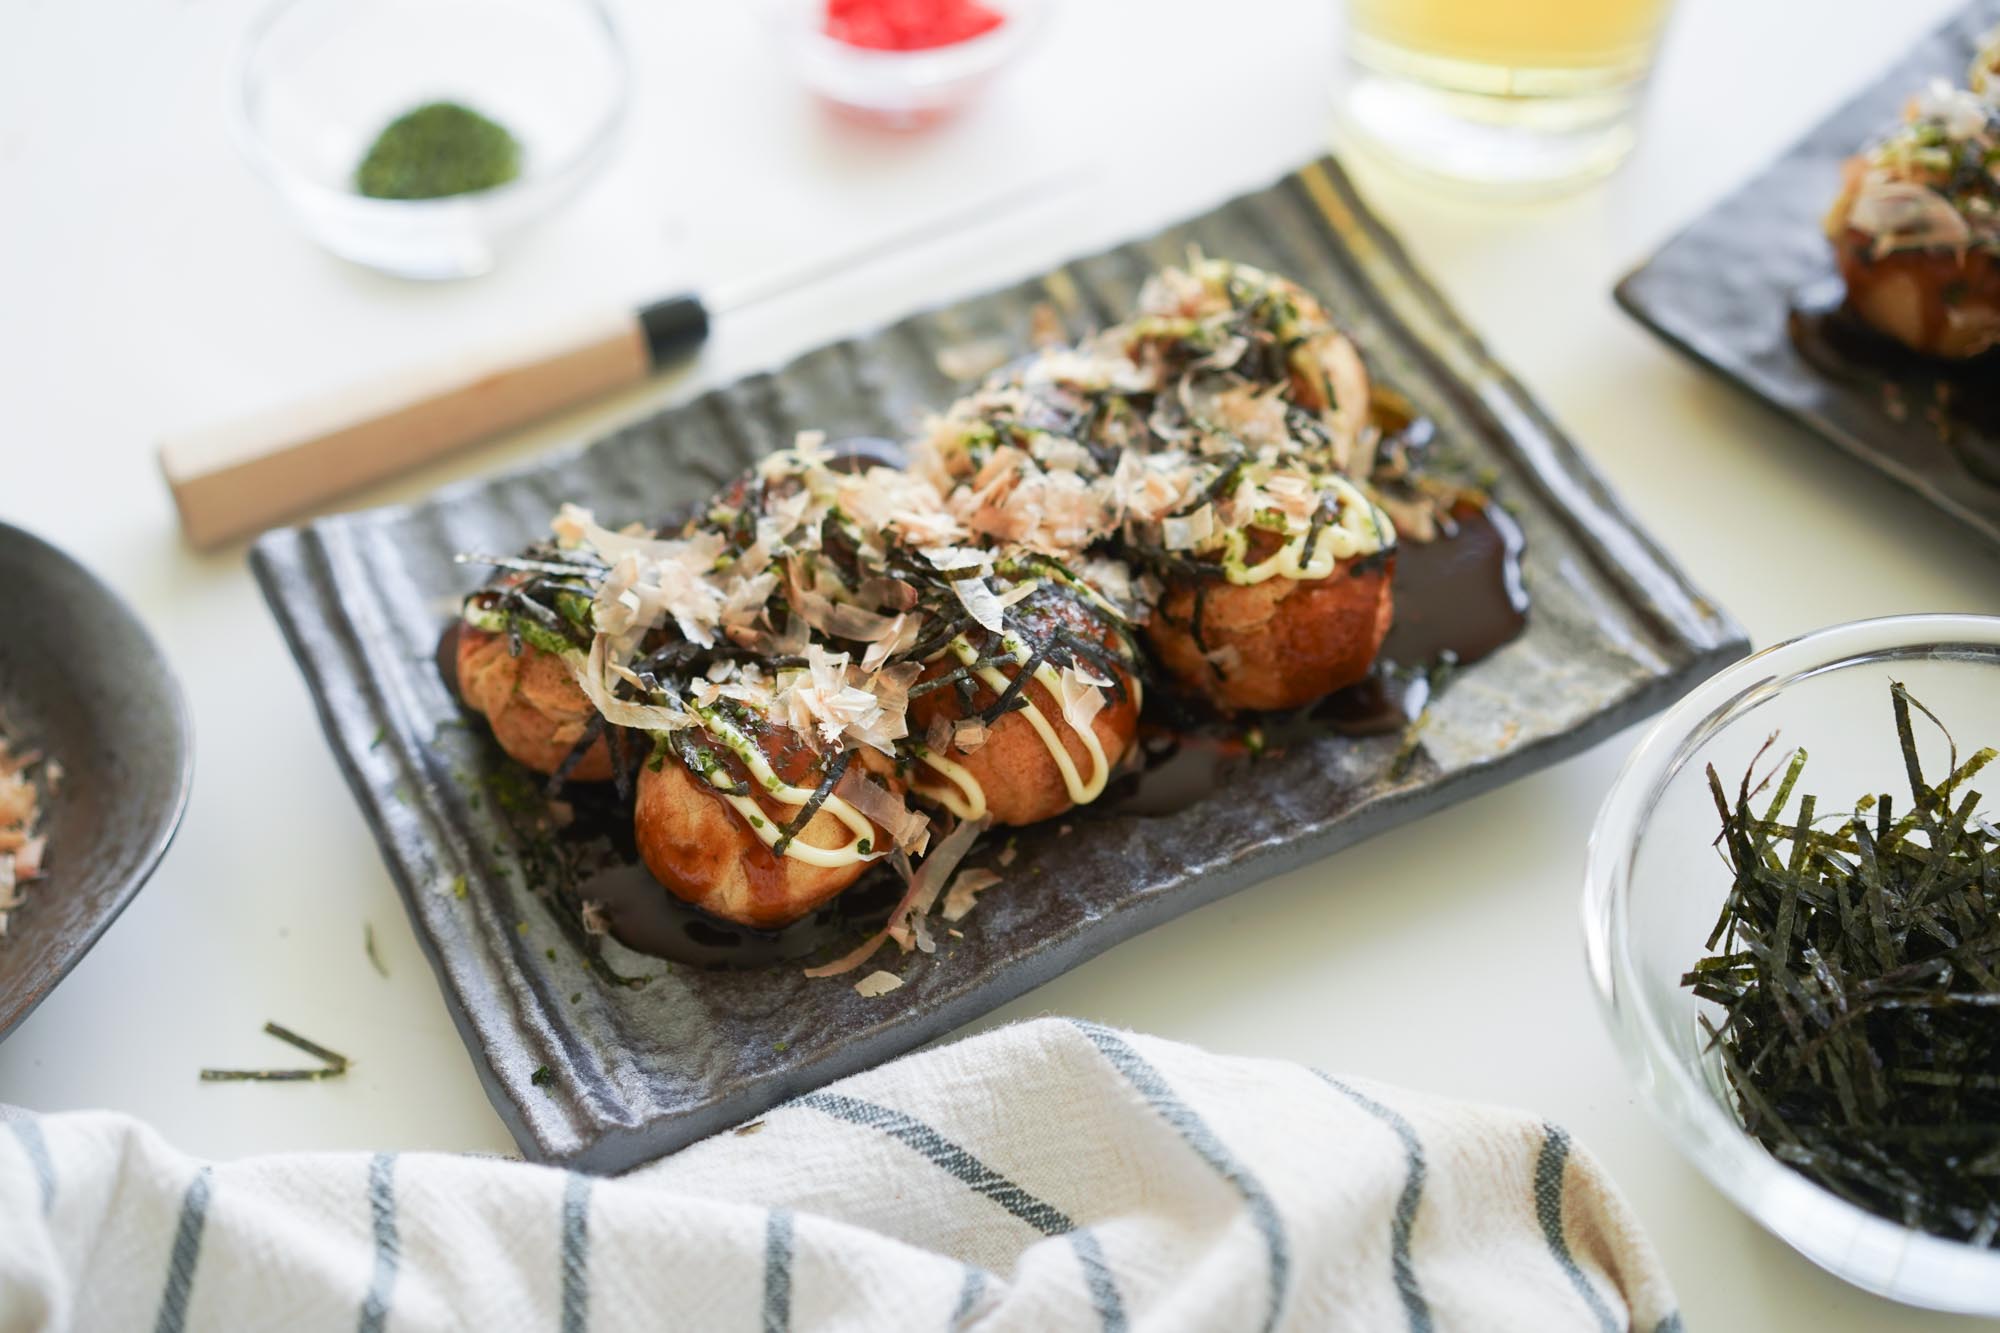 Delicious Takoyaki – Japan's Octopus Ball Snack That's Too Good To